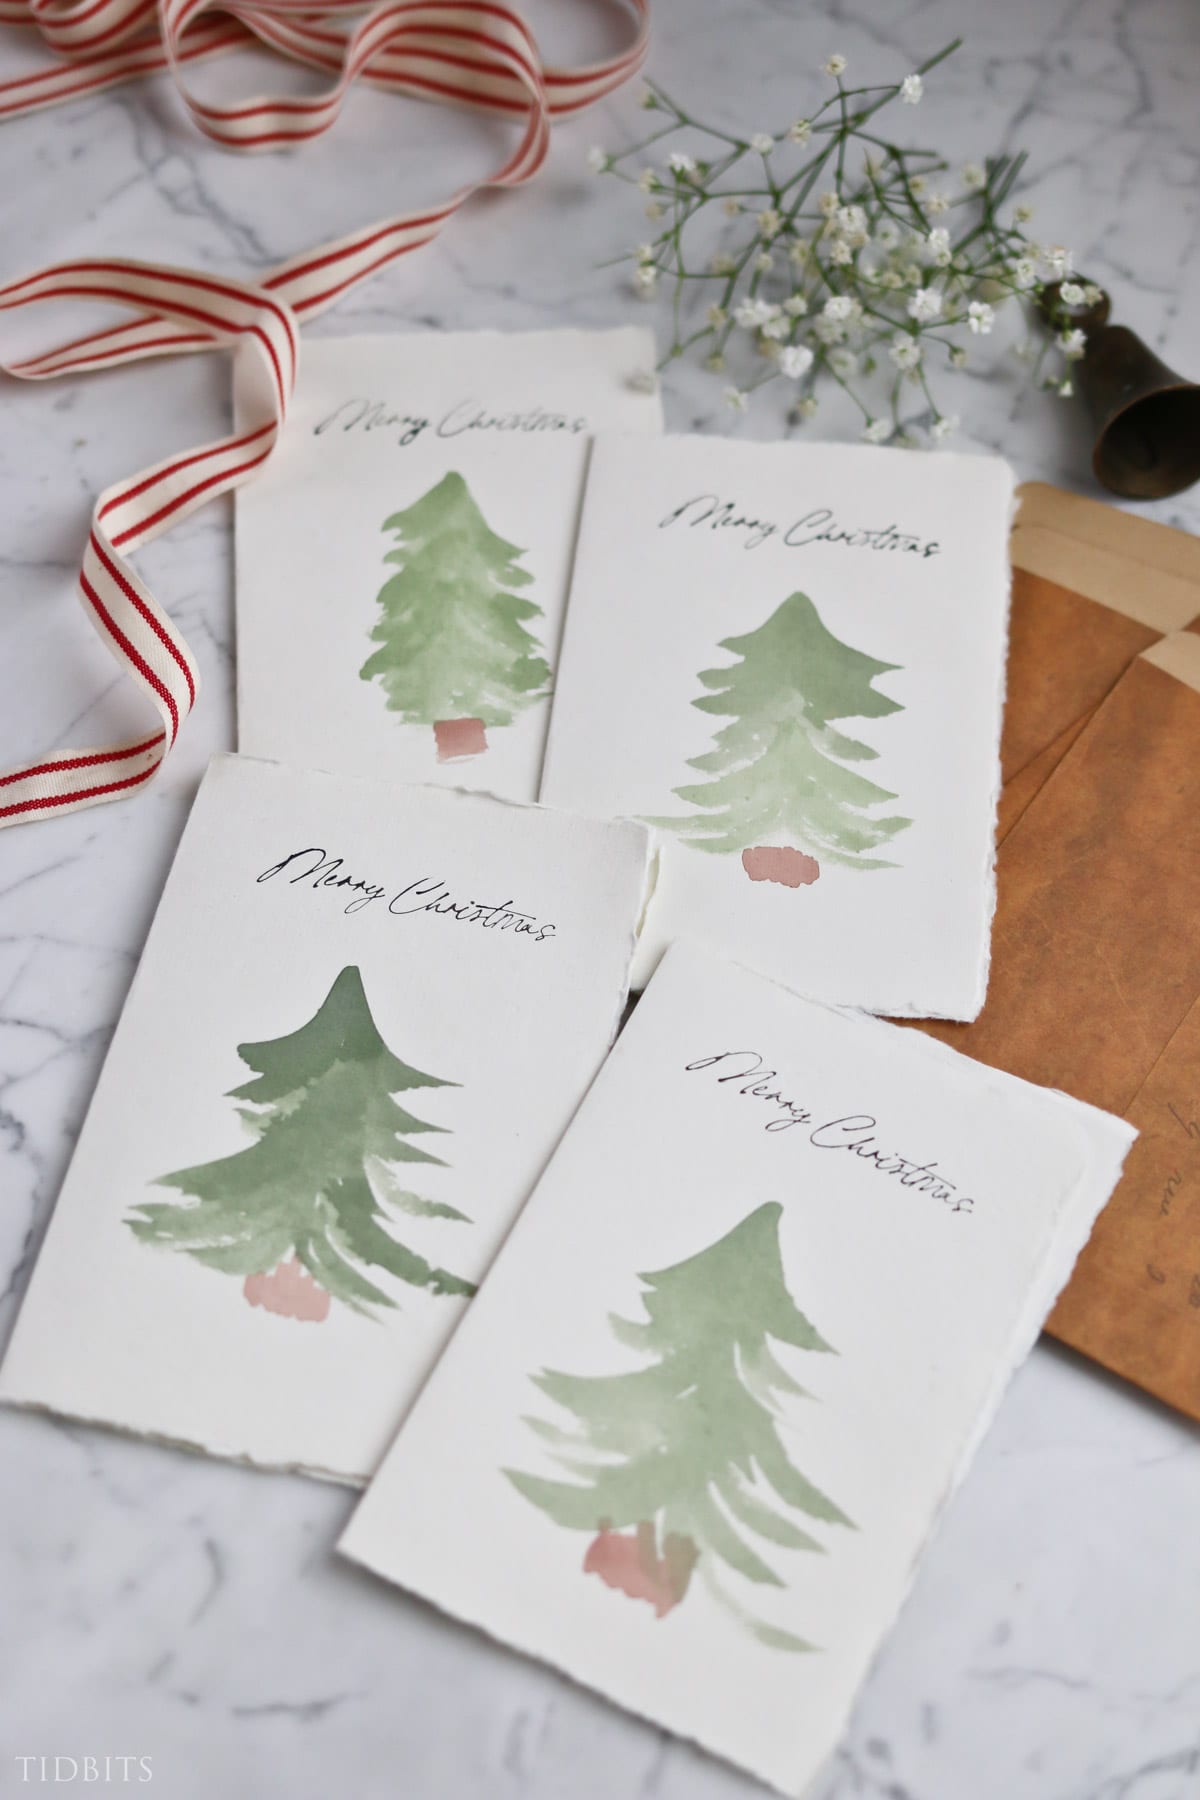 Easy DIY Watercolor Christmas Cards - No Skills Required! - Tidbits